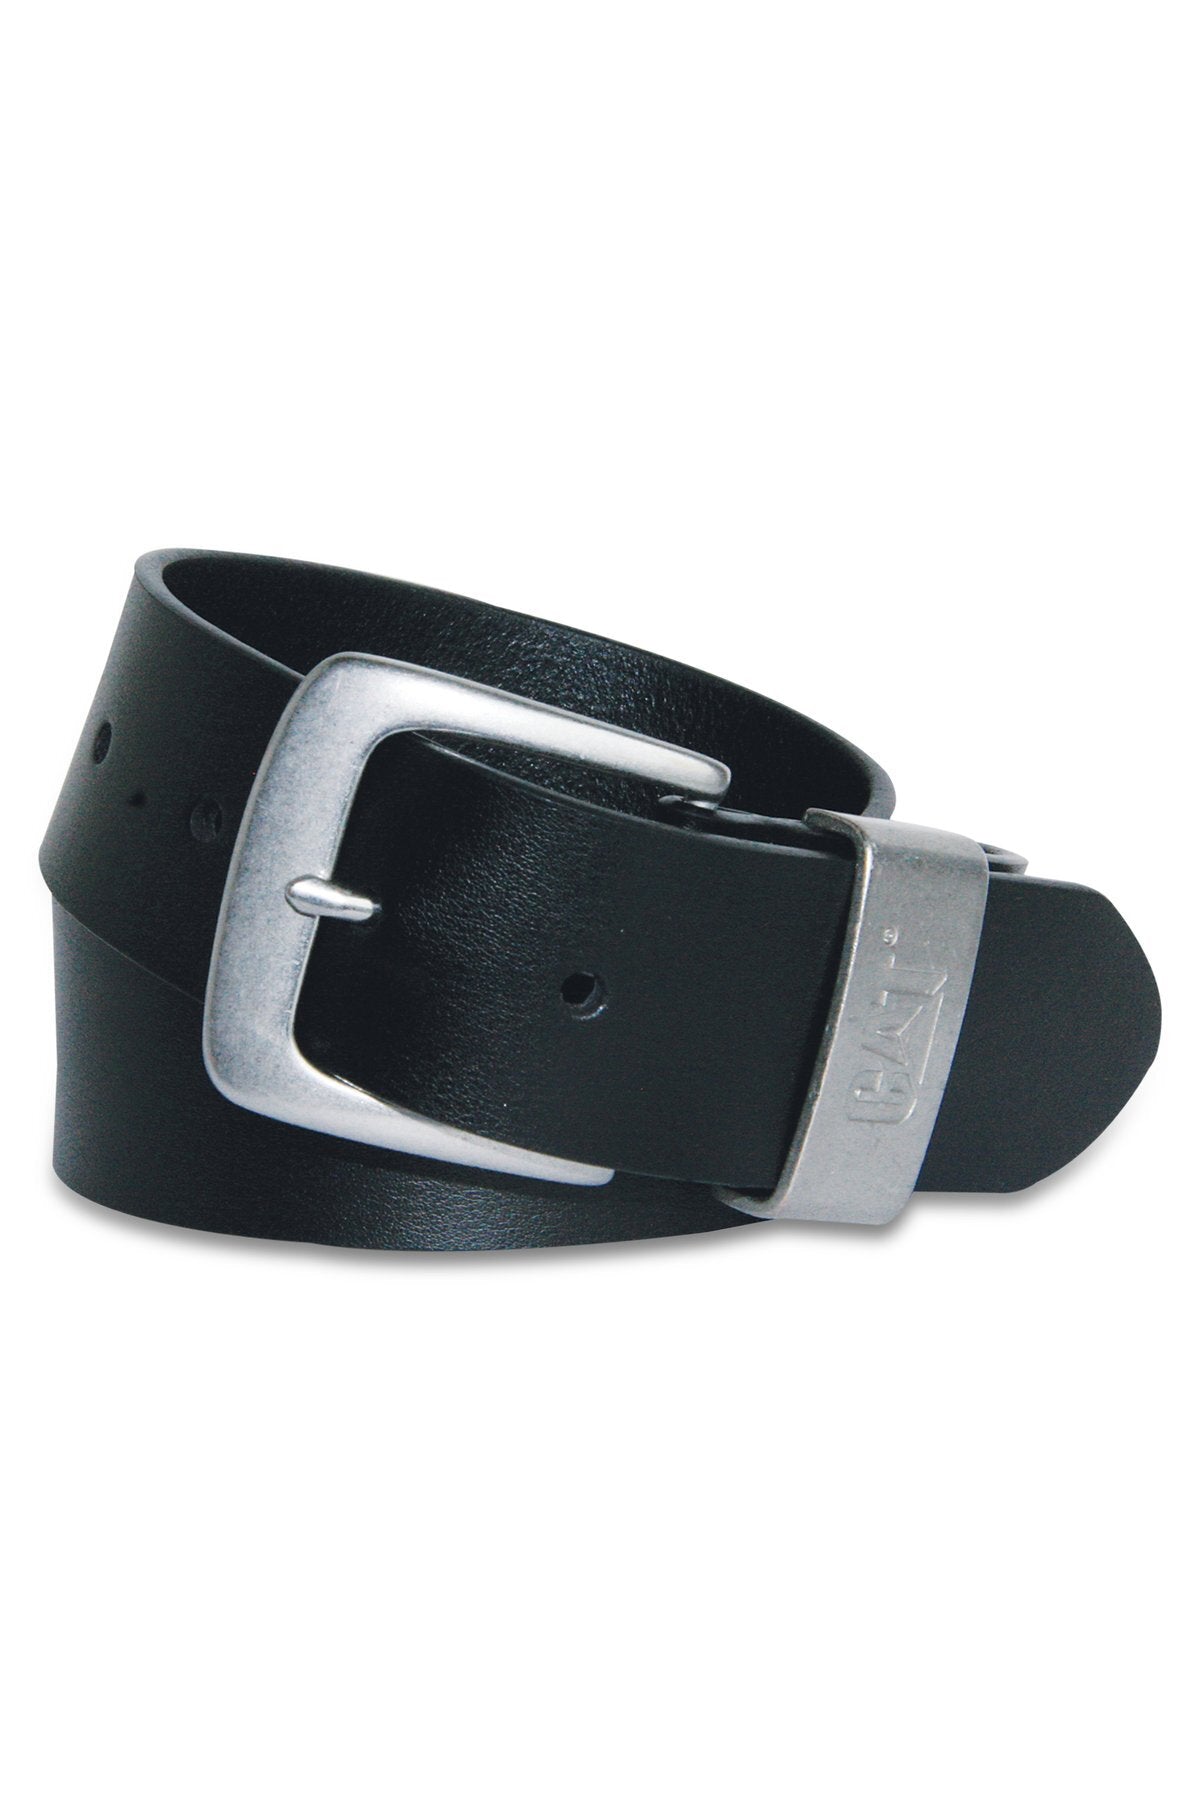 CAT Madison Genuine Leather Belts